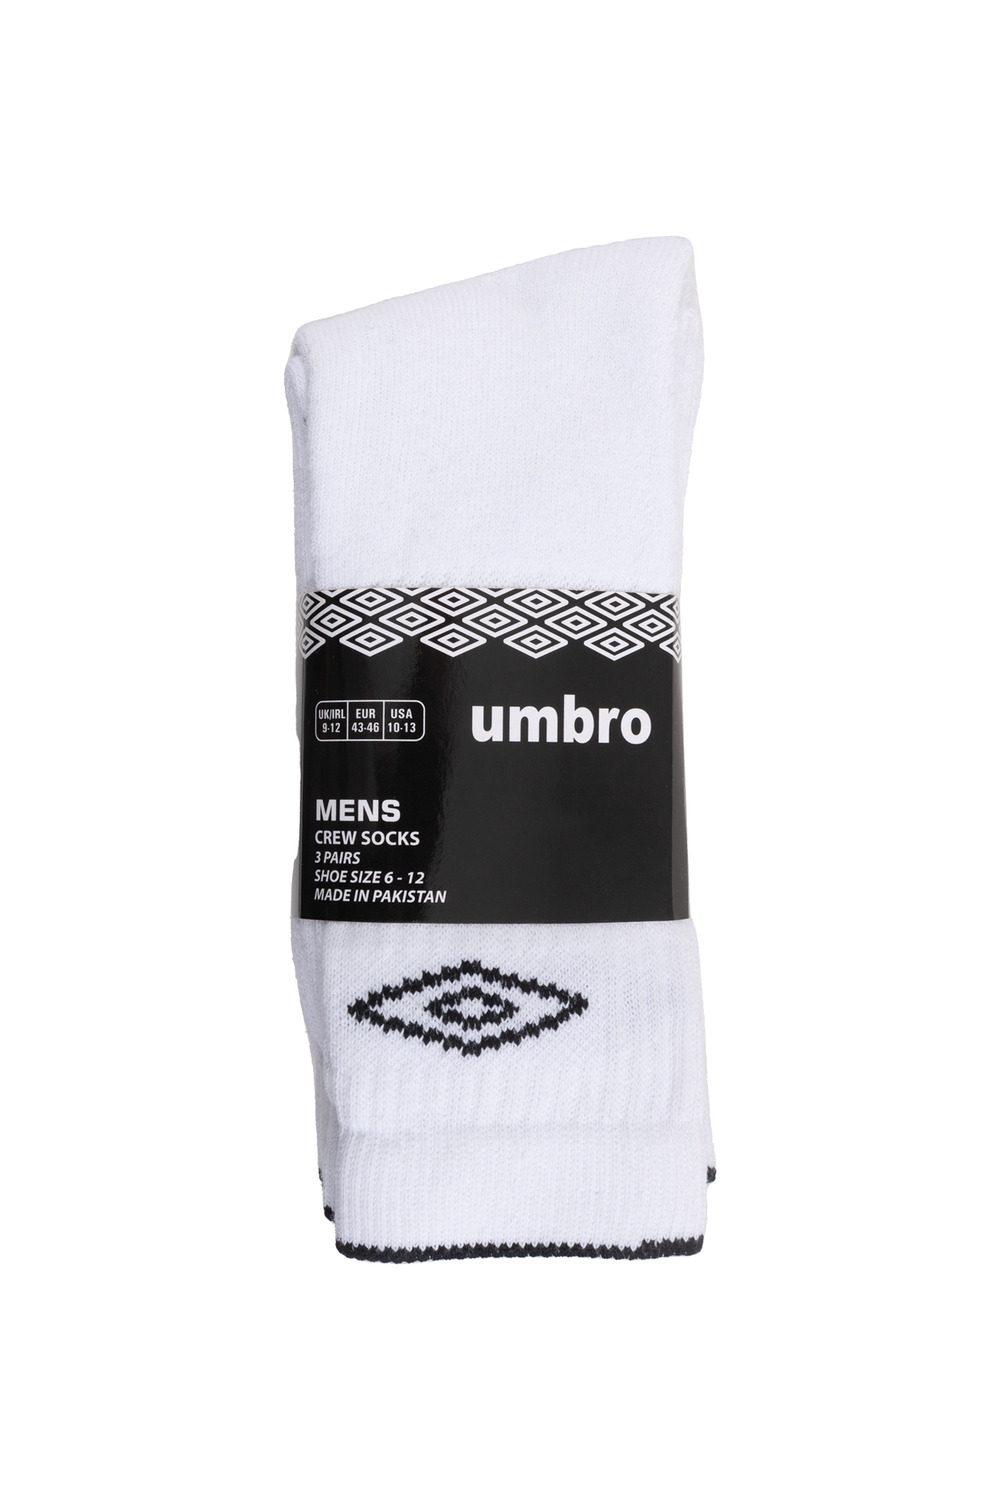 Umbro - Sport crew socks - 3 pairs